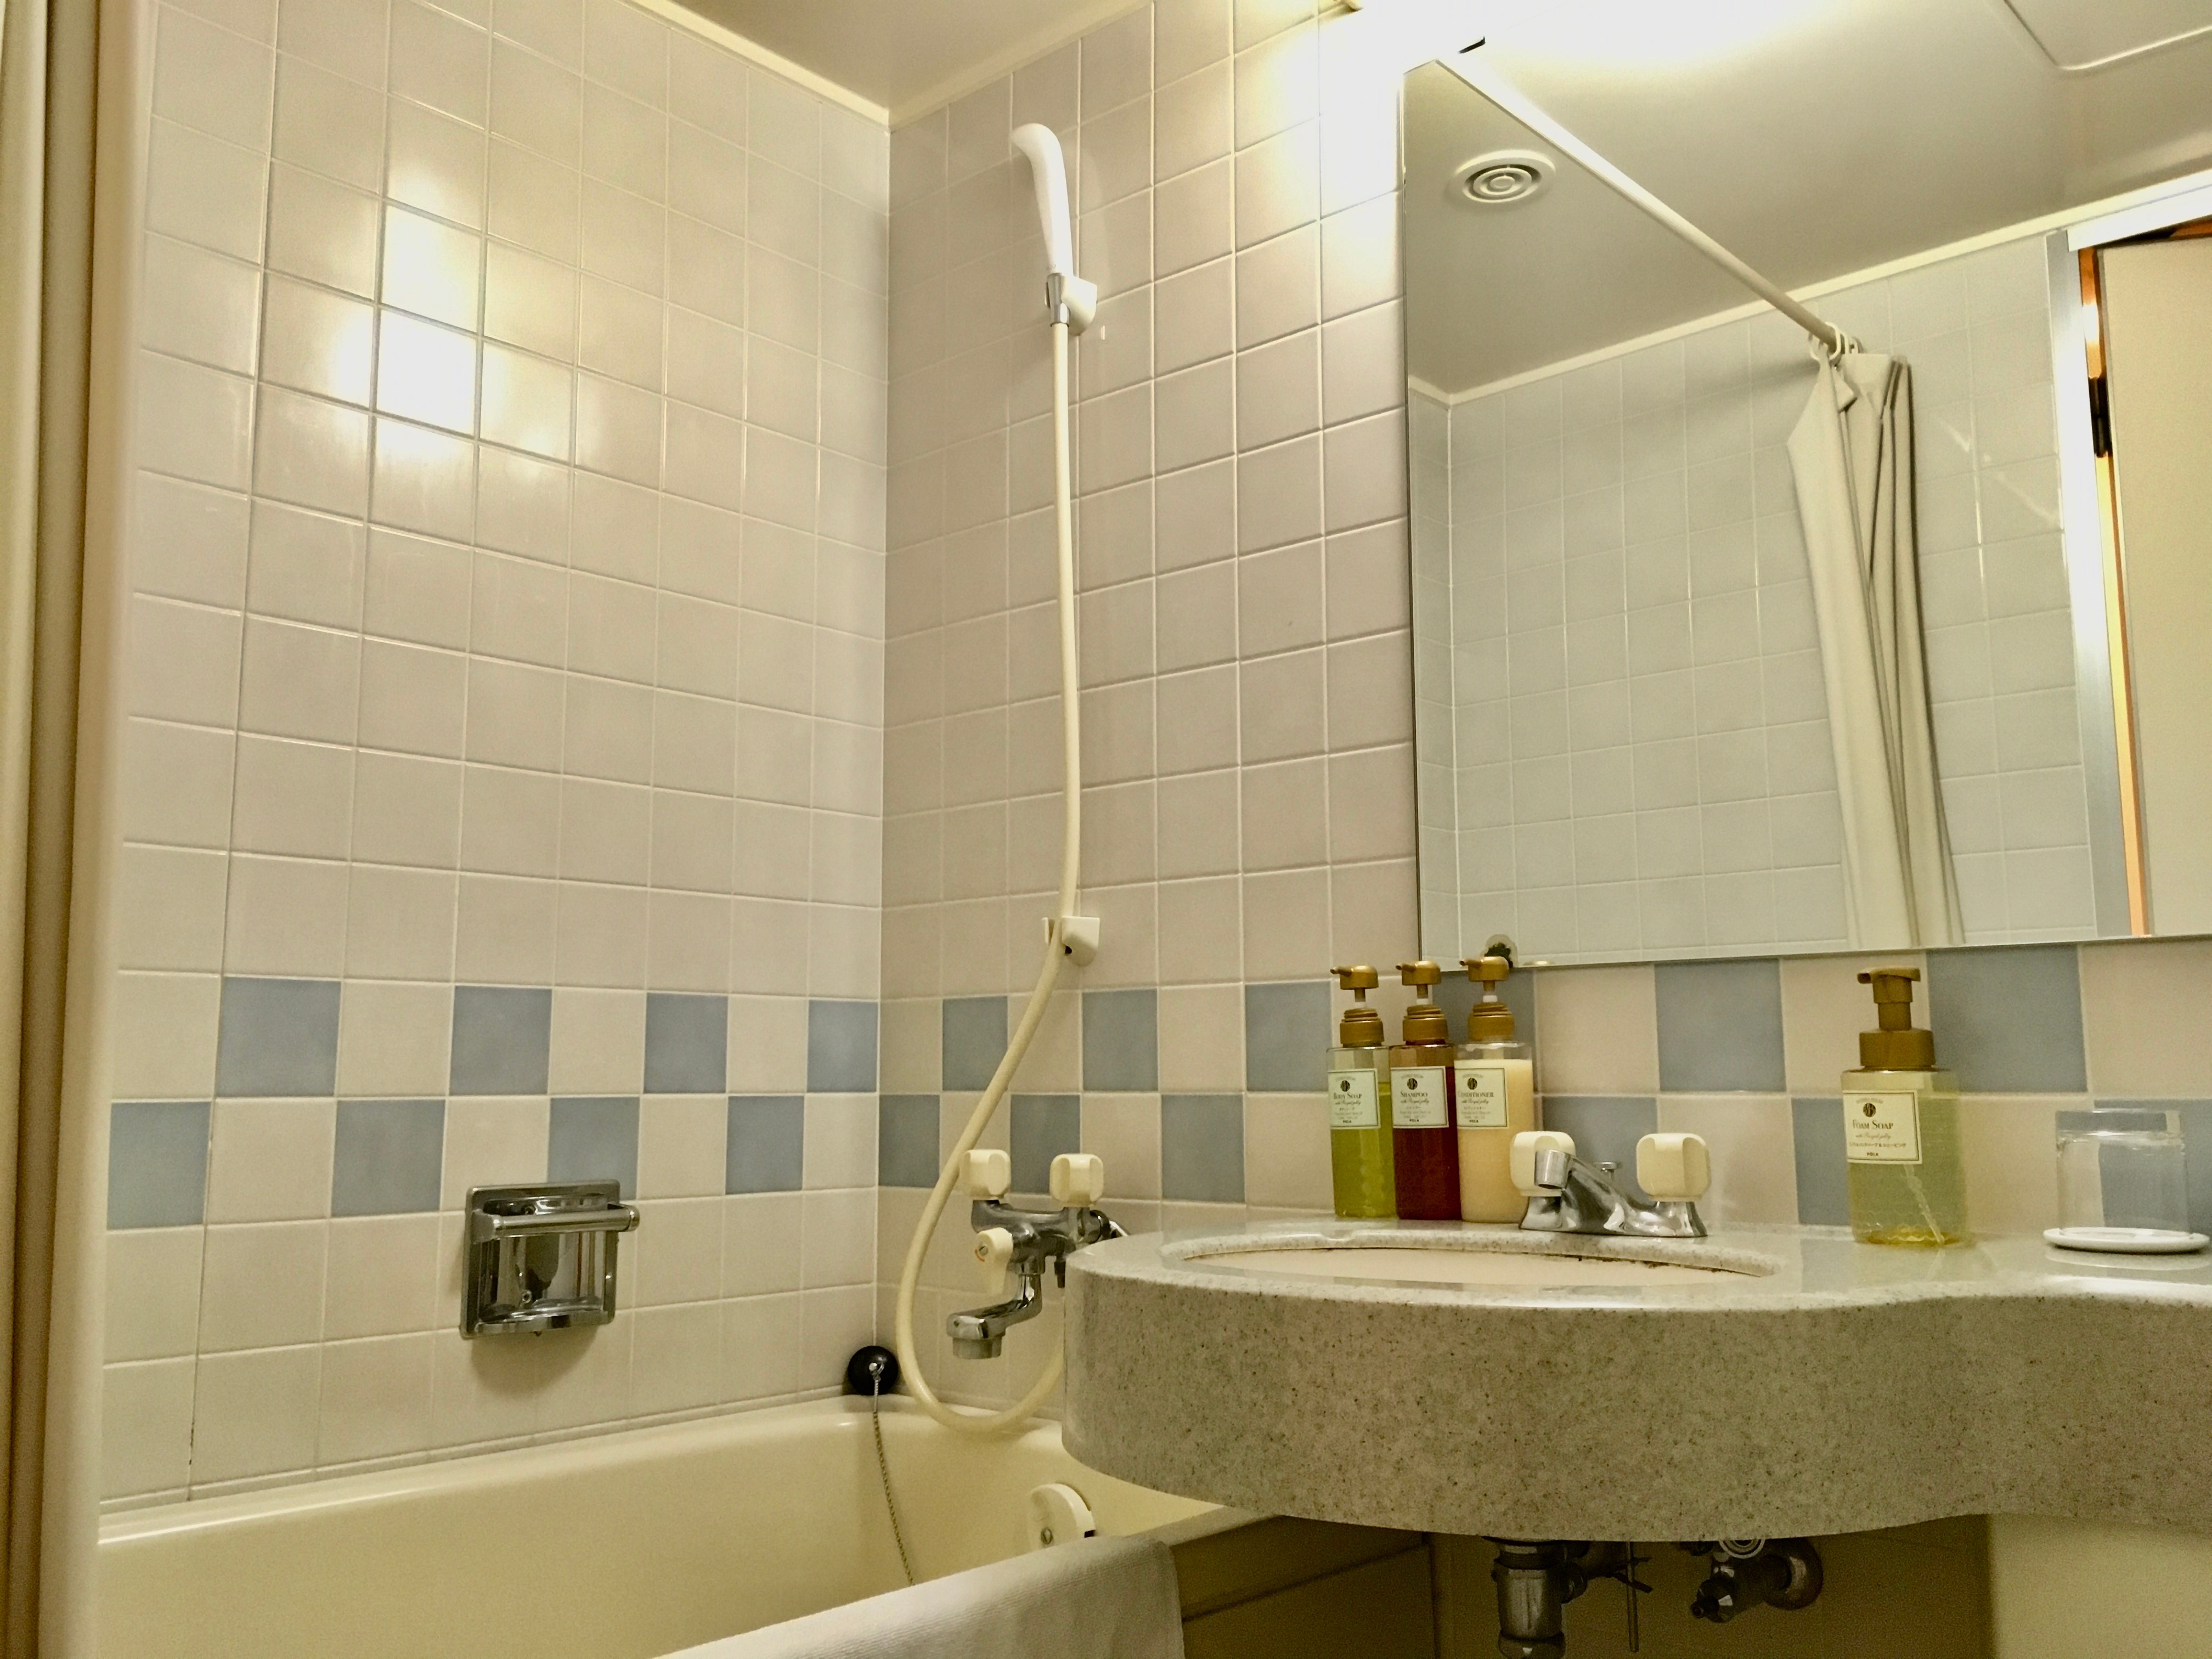 Guest room unit bath * Example